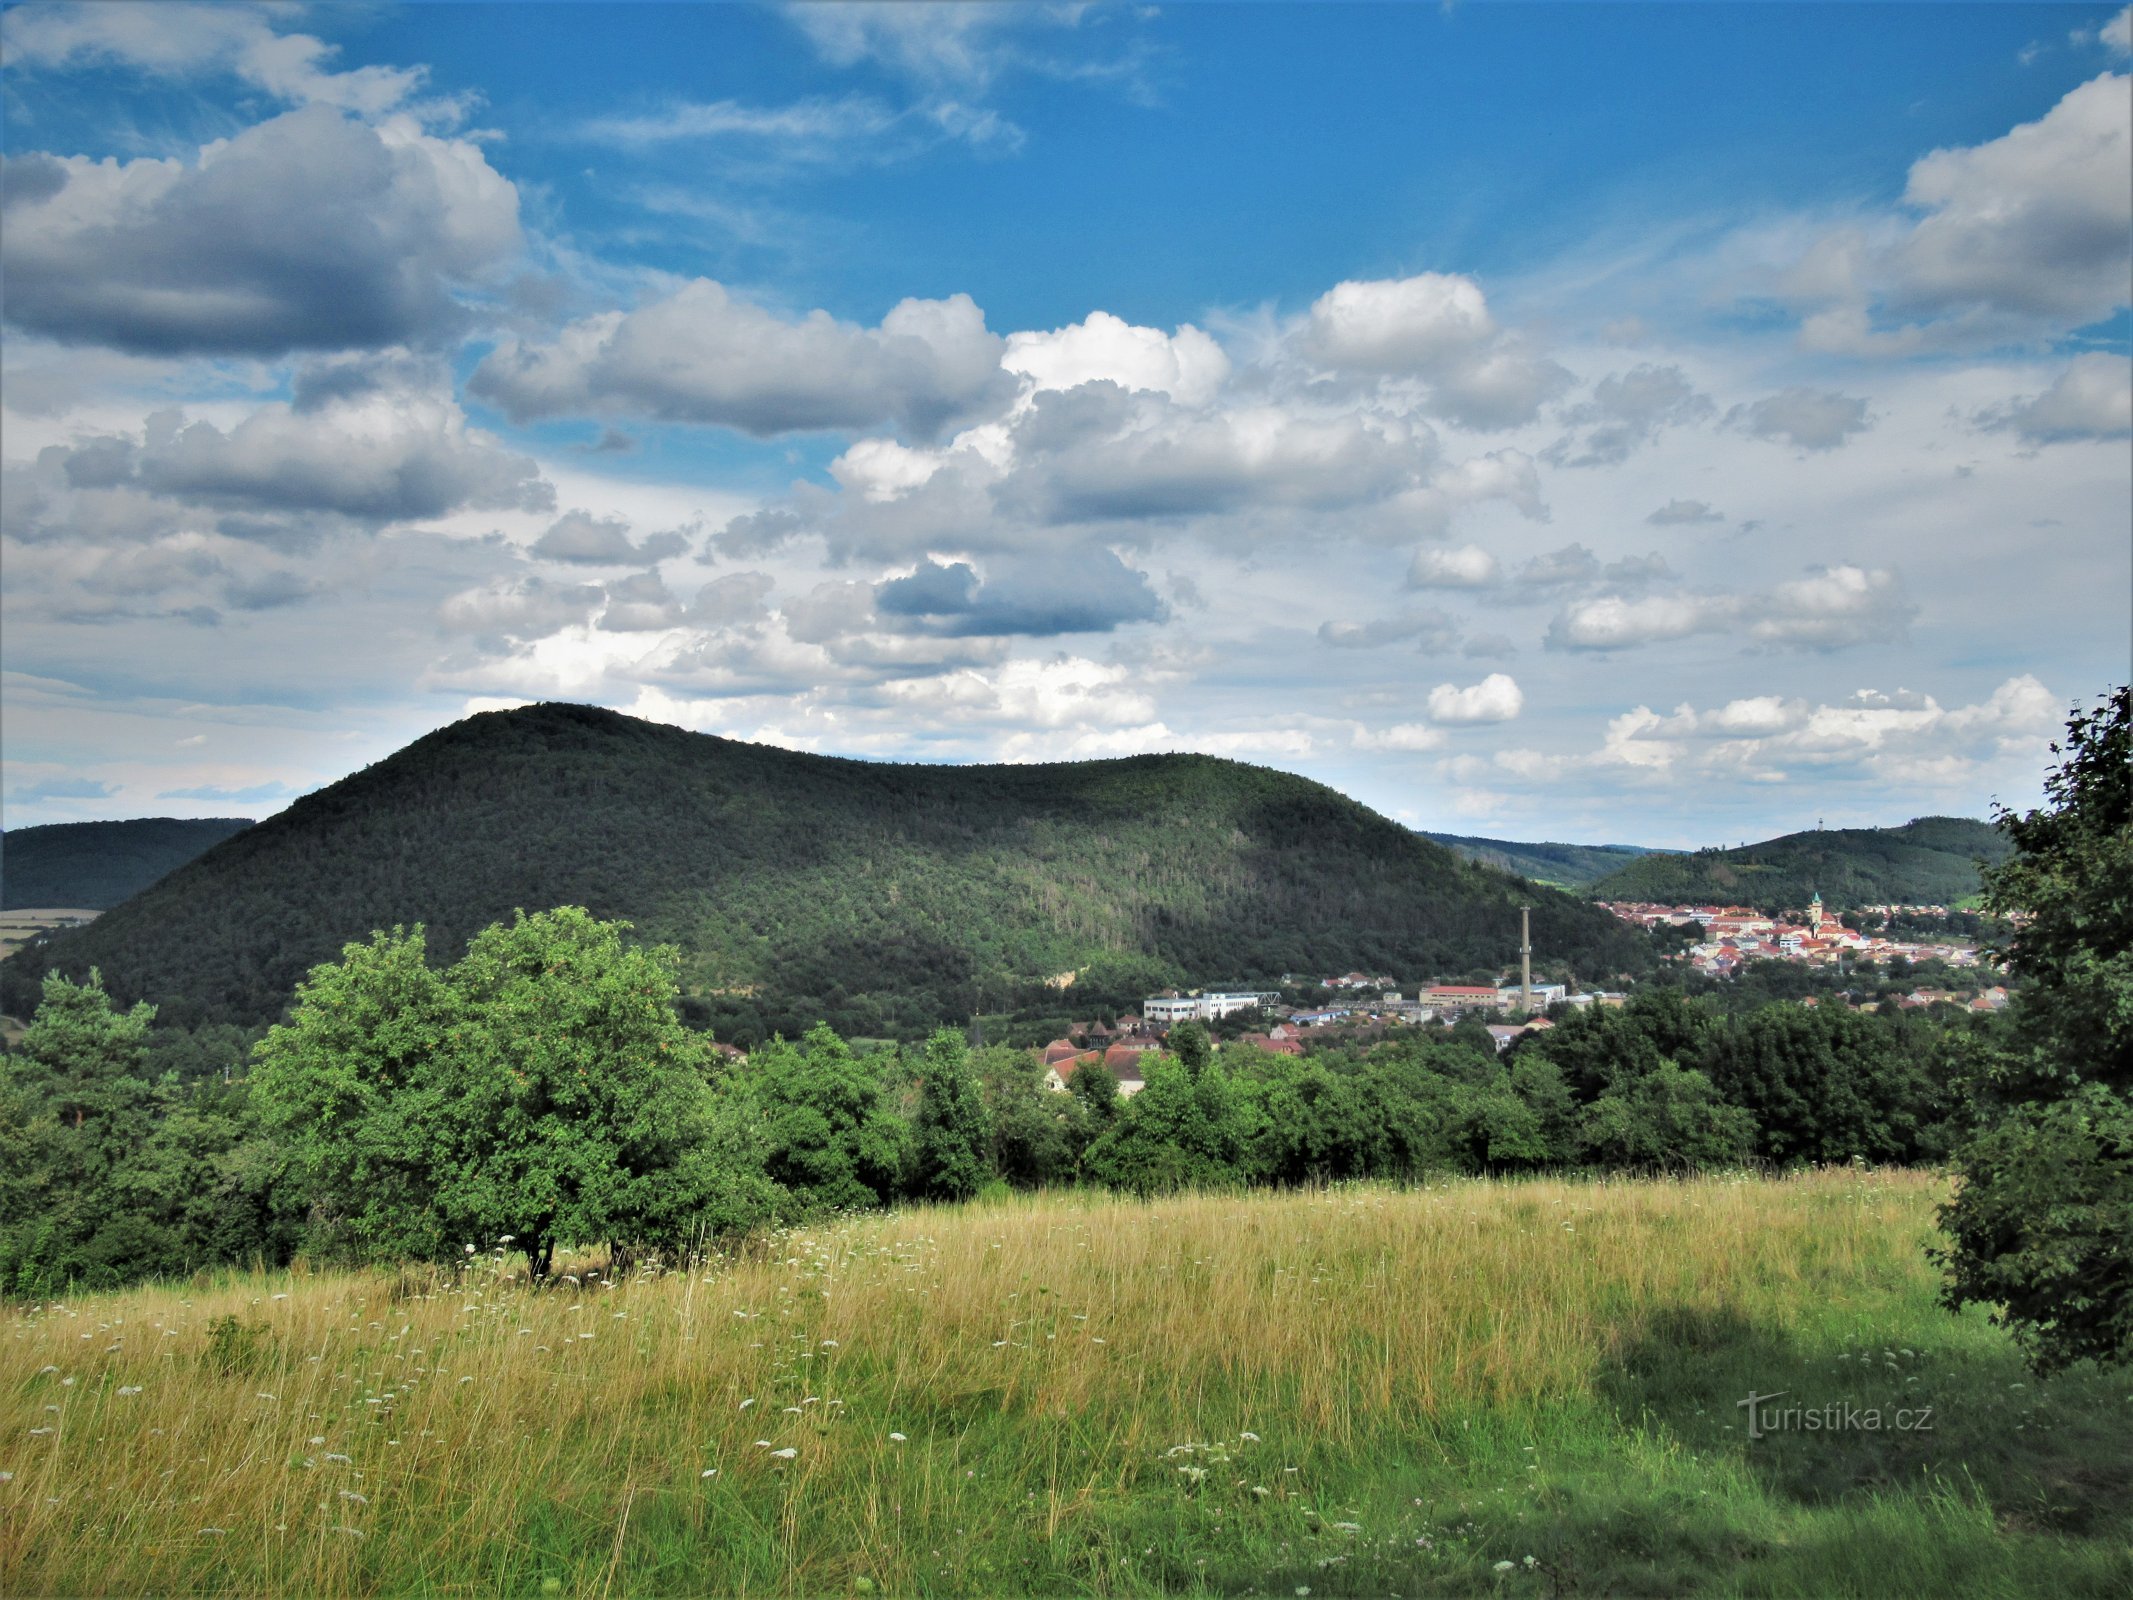 从 Čečička 斜坡看 Květnice